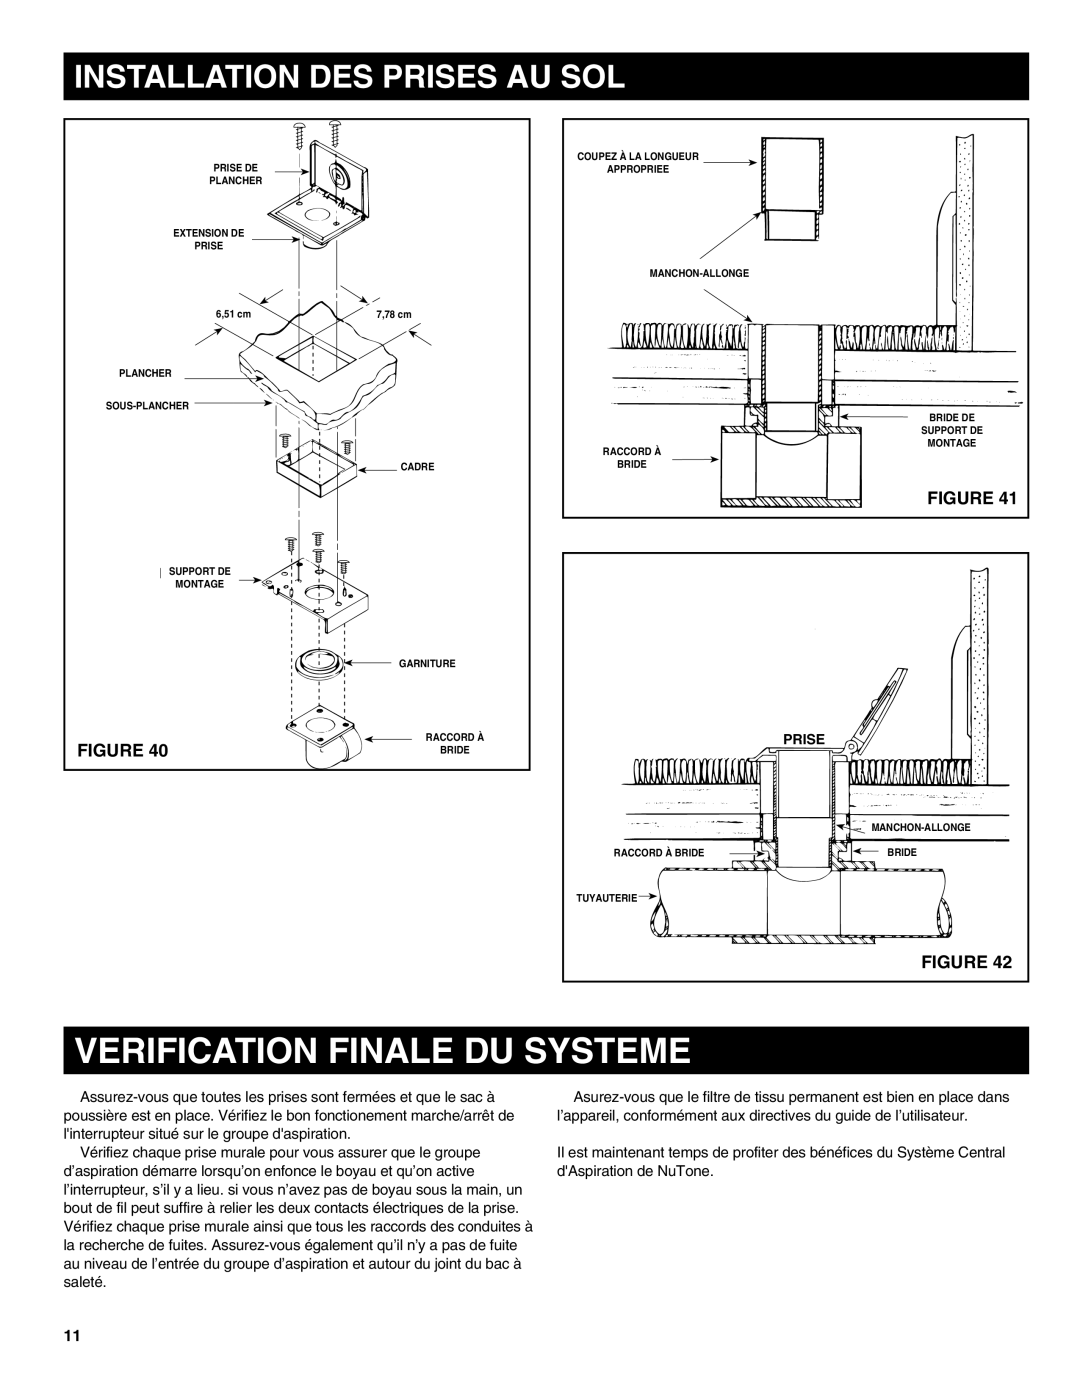 NuTone CV570, CV554, CV556 installation instructions Verification Finale Du Systeme, Installation Des Prises Au Sol 